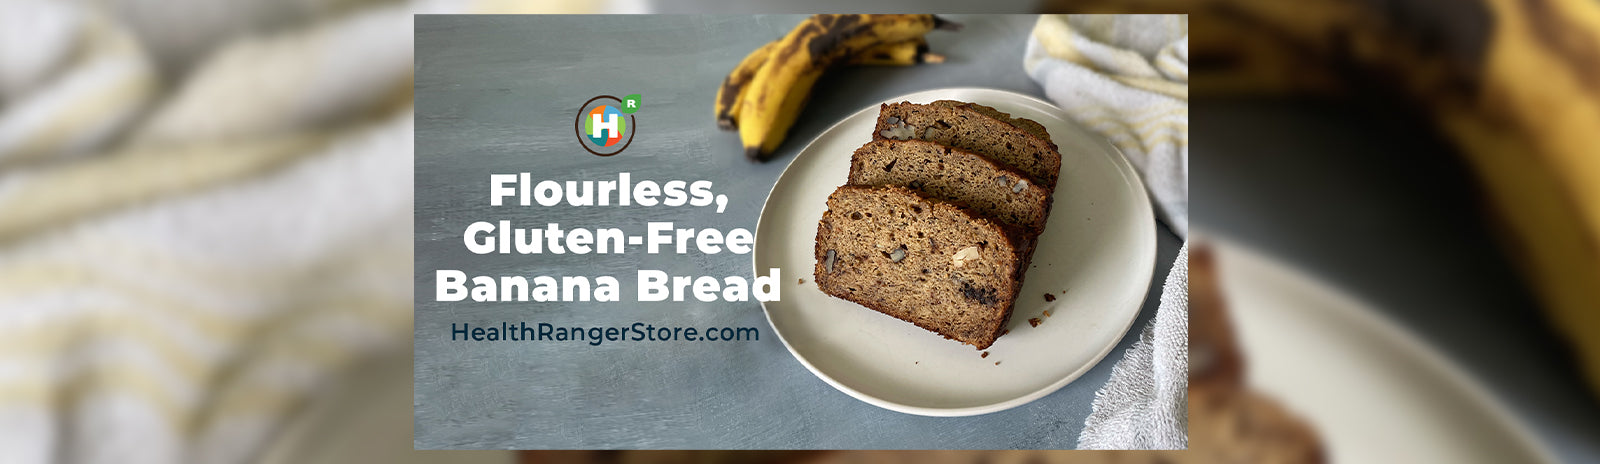 Flourless, Gluten-Free Banana Bread